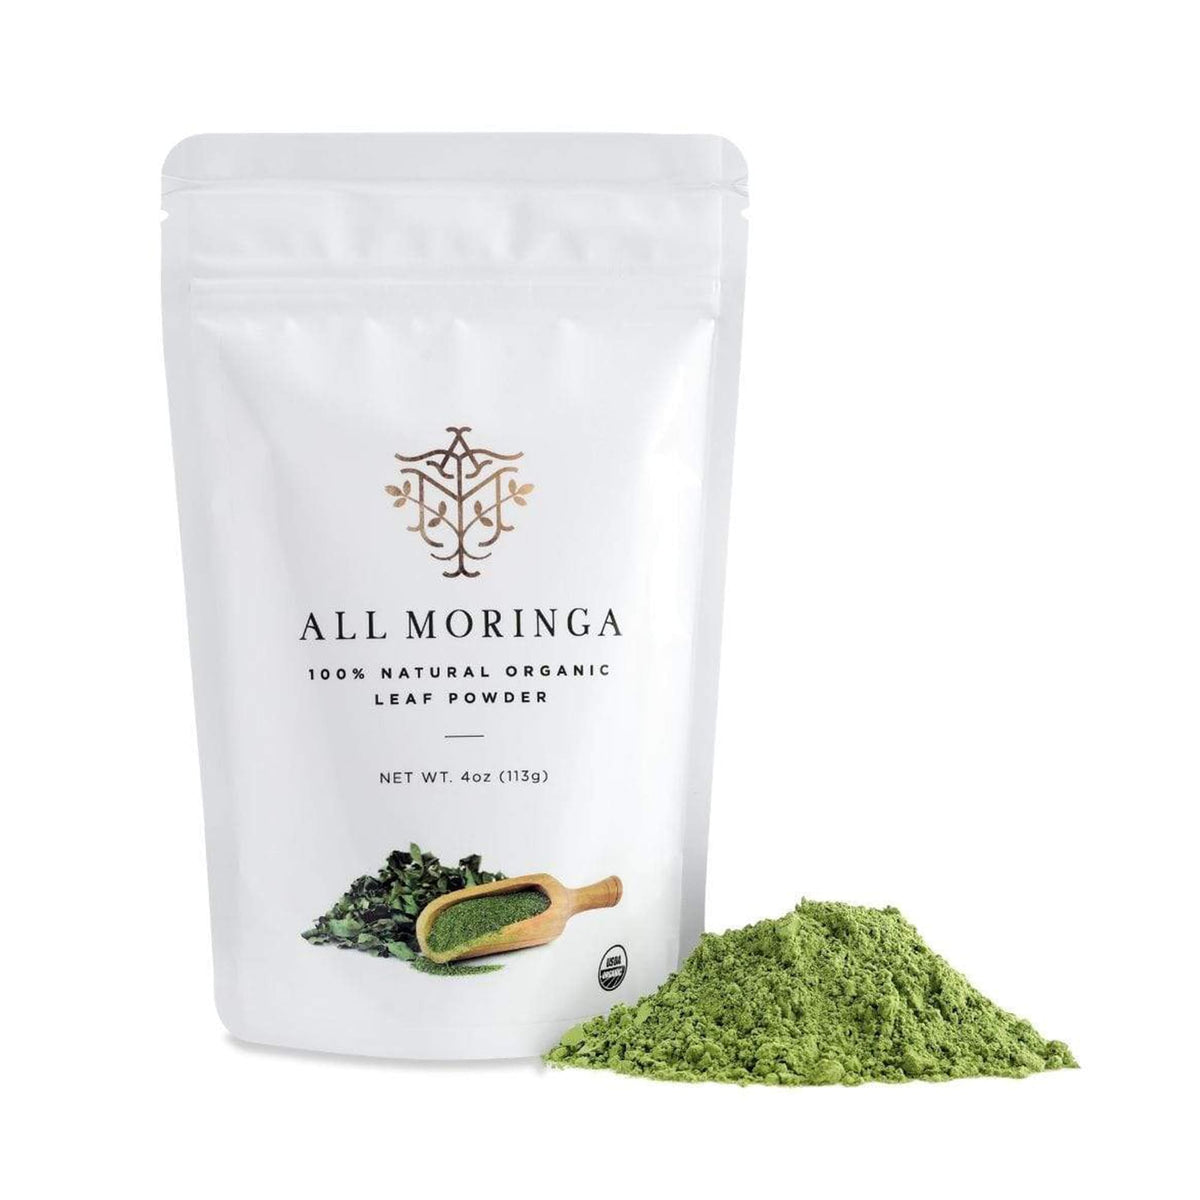 All Moringa - Organic Moringa Leaf Powder 100% Natural Organic Raw Moringa Oleifera Powder